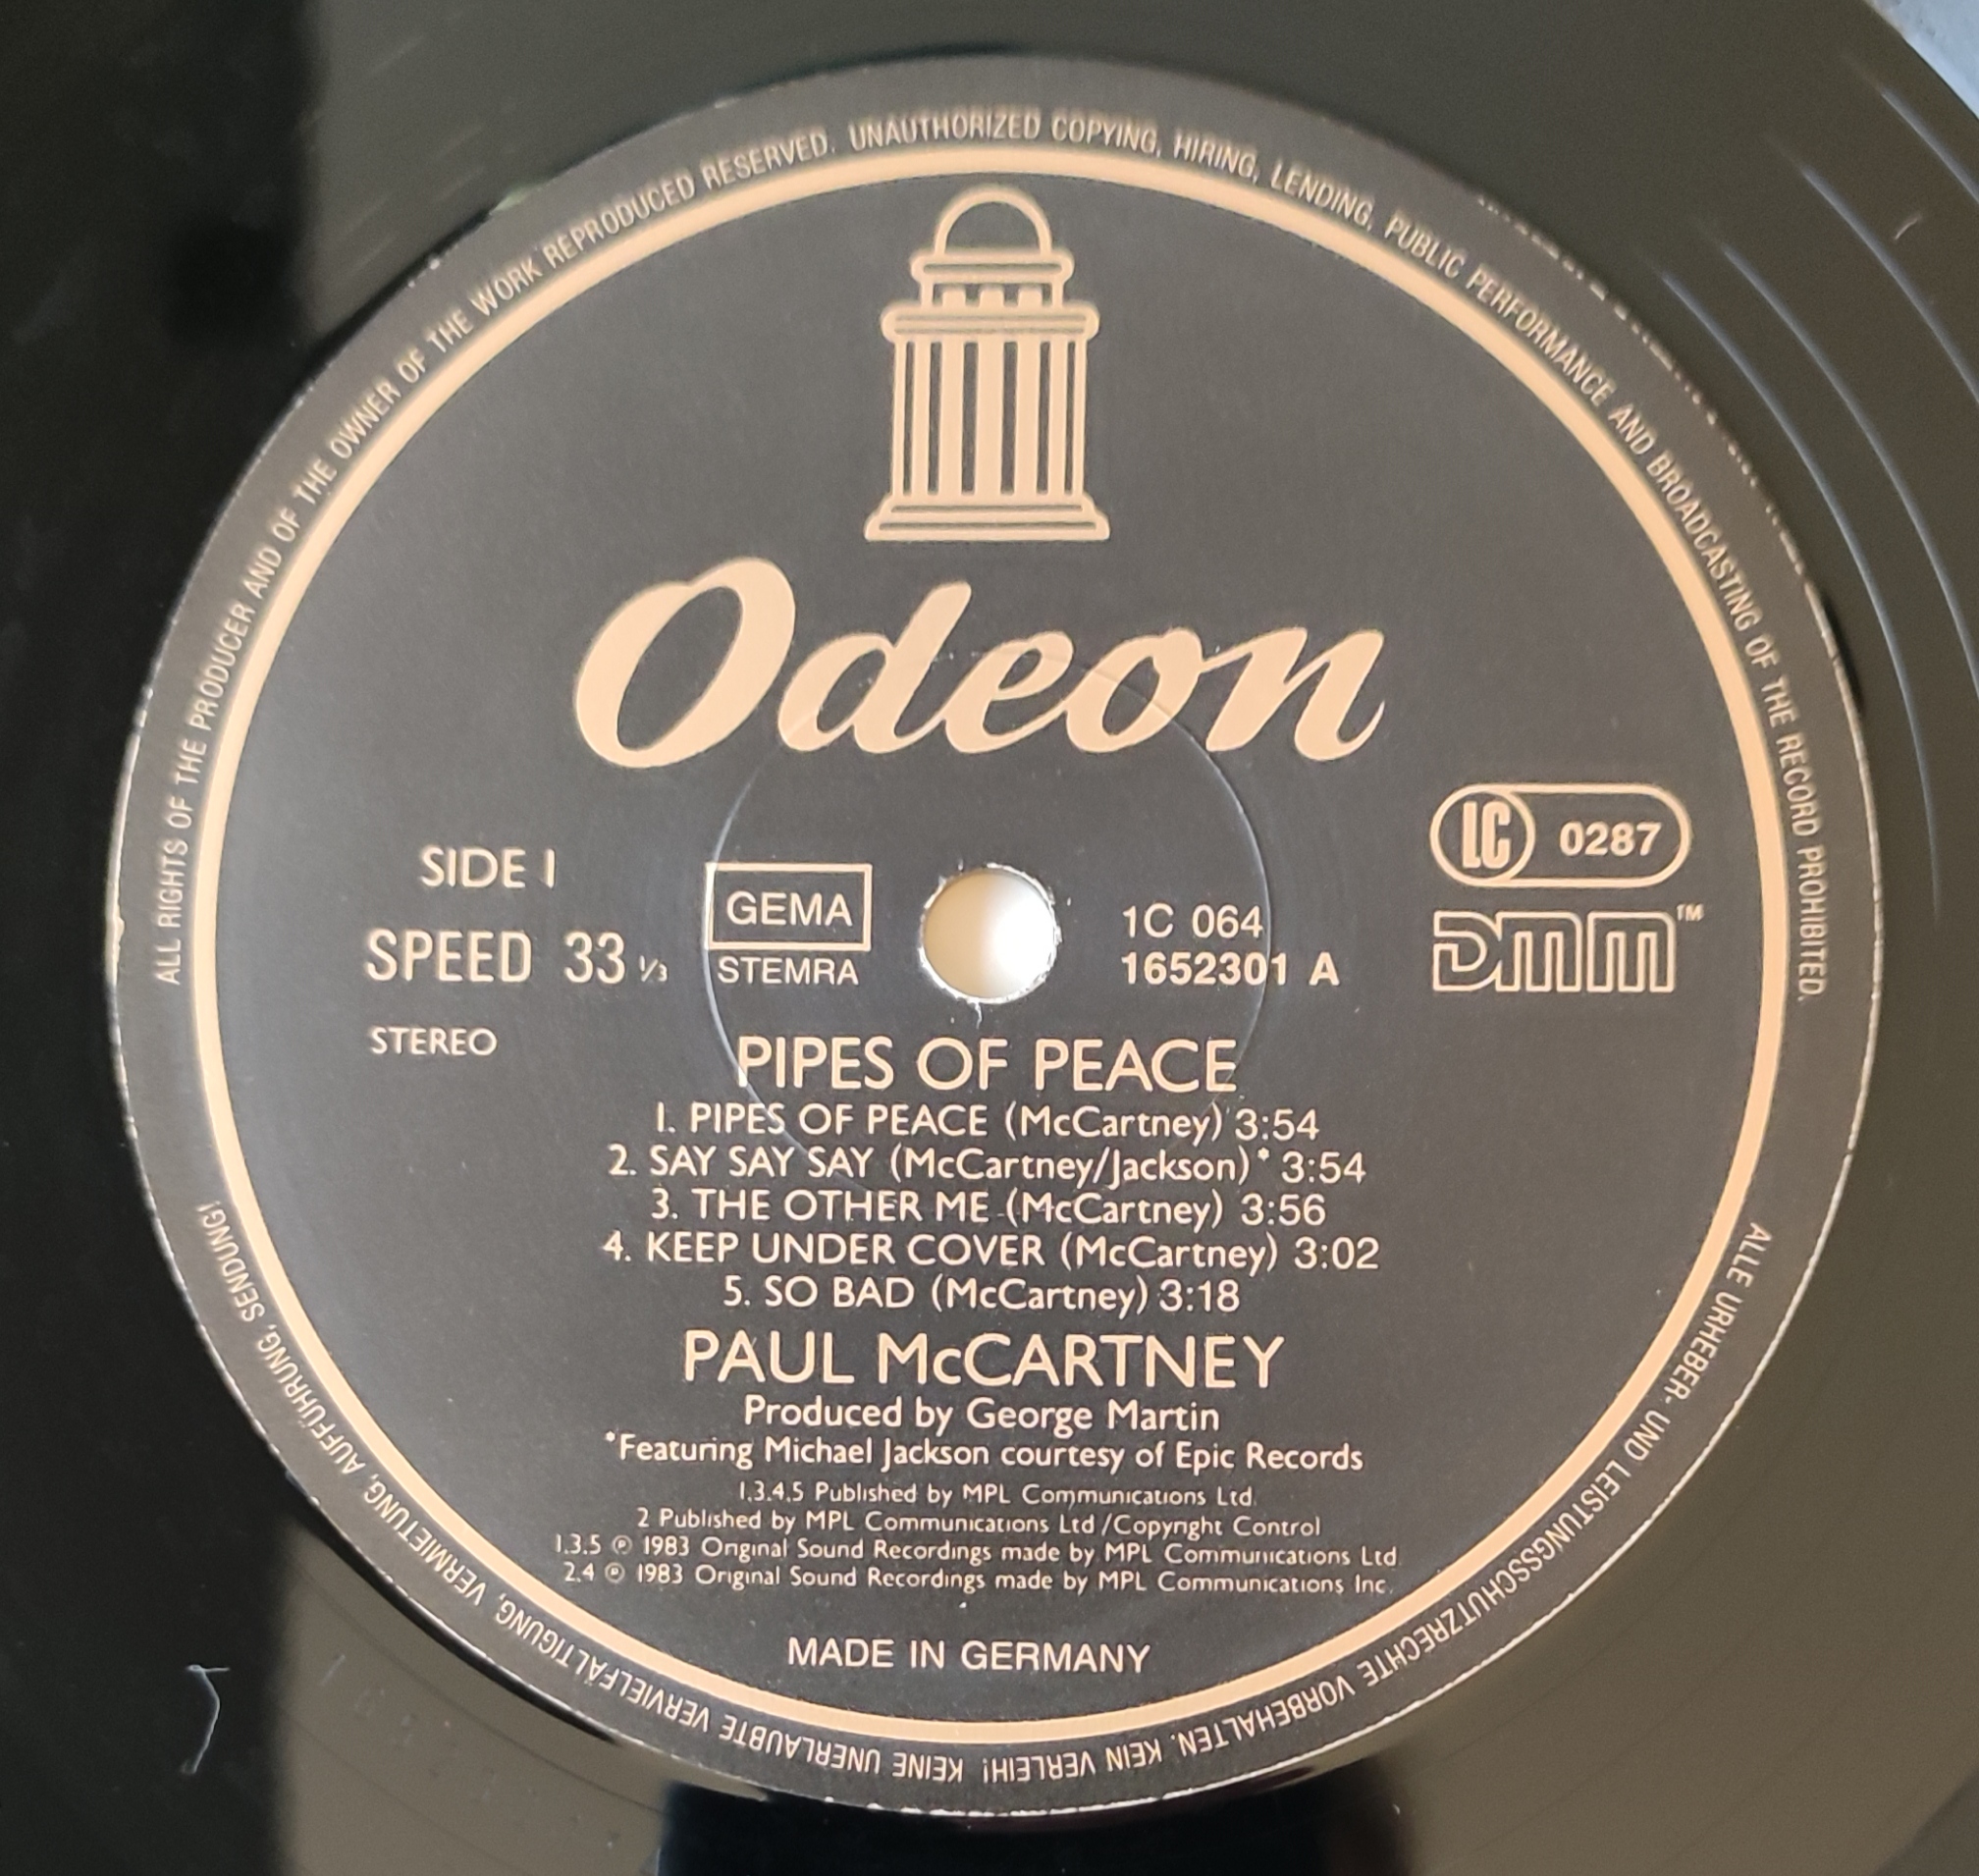 PAUL Mc CARTNEY - Pipes of peace - 1983 - Germany - Odeon - Vinyle -33 Tours  - OriginVinylStore - OriginVinylStore